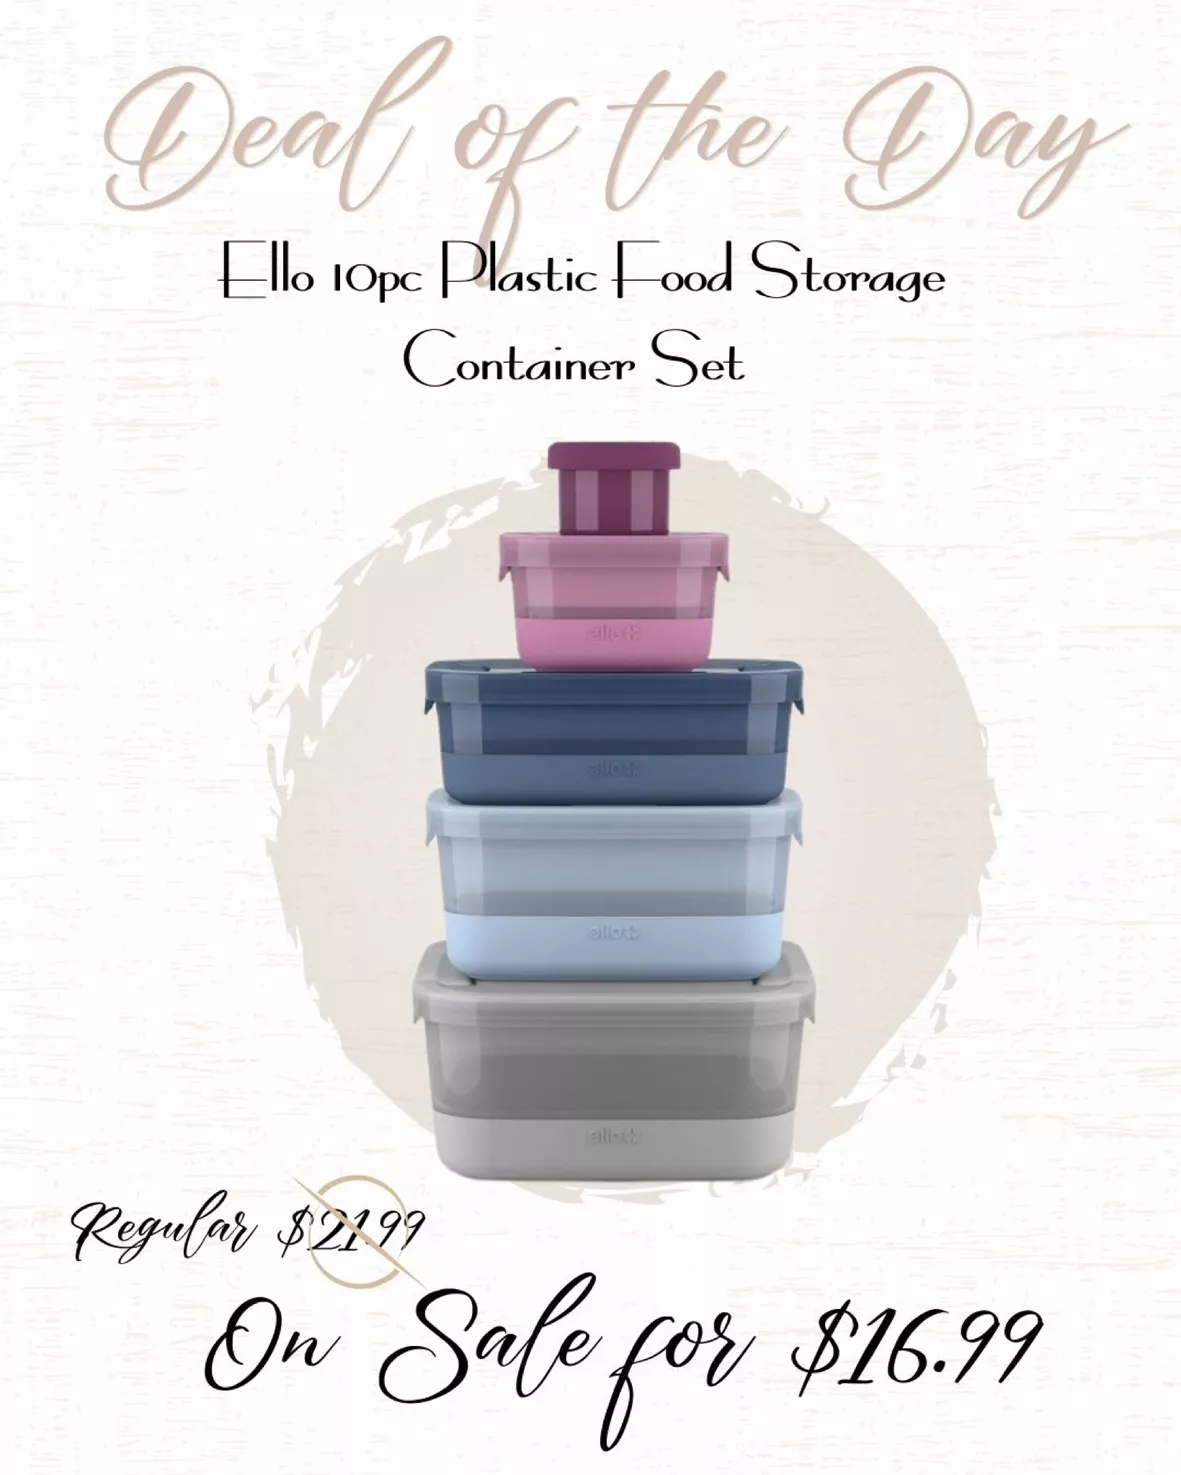 Ello 10pc Plastic Food Storage Container Set with Skid Free Soft